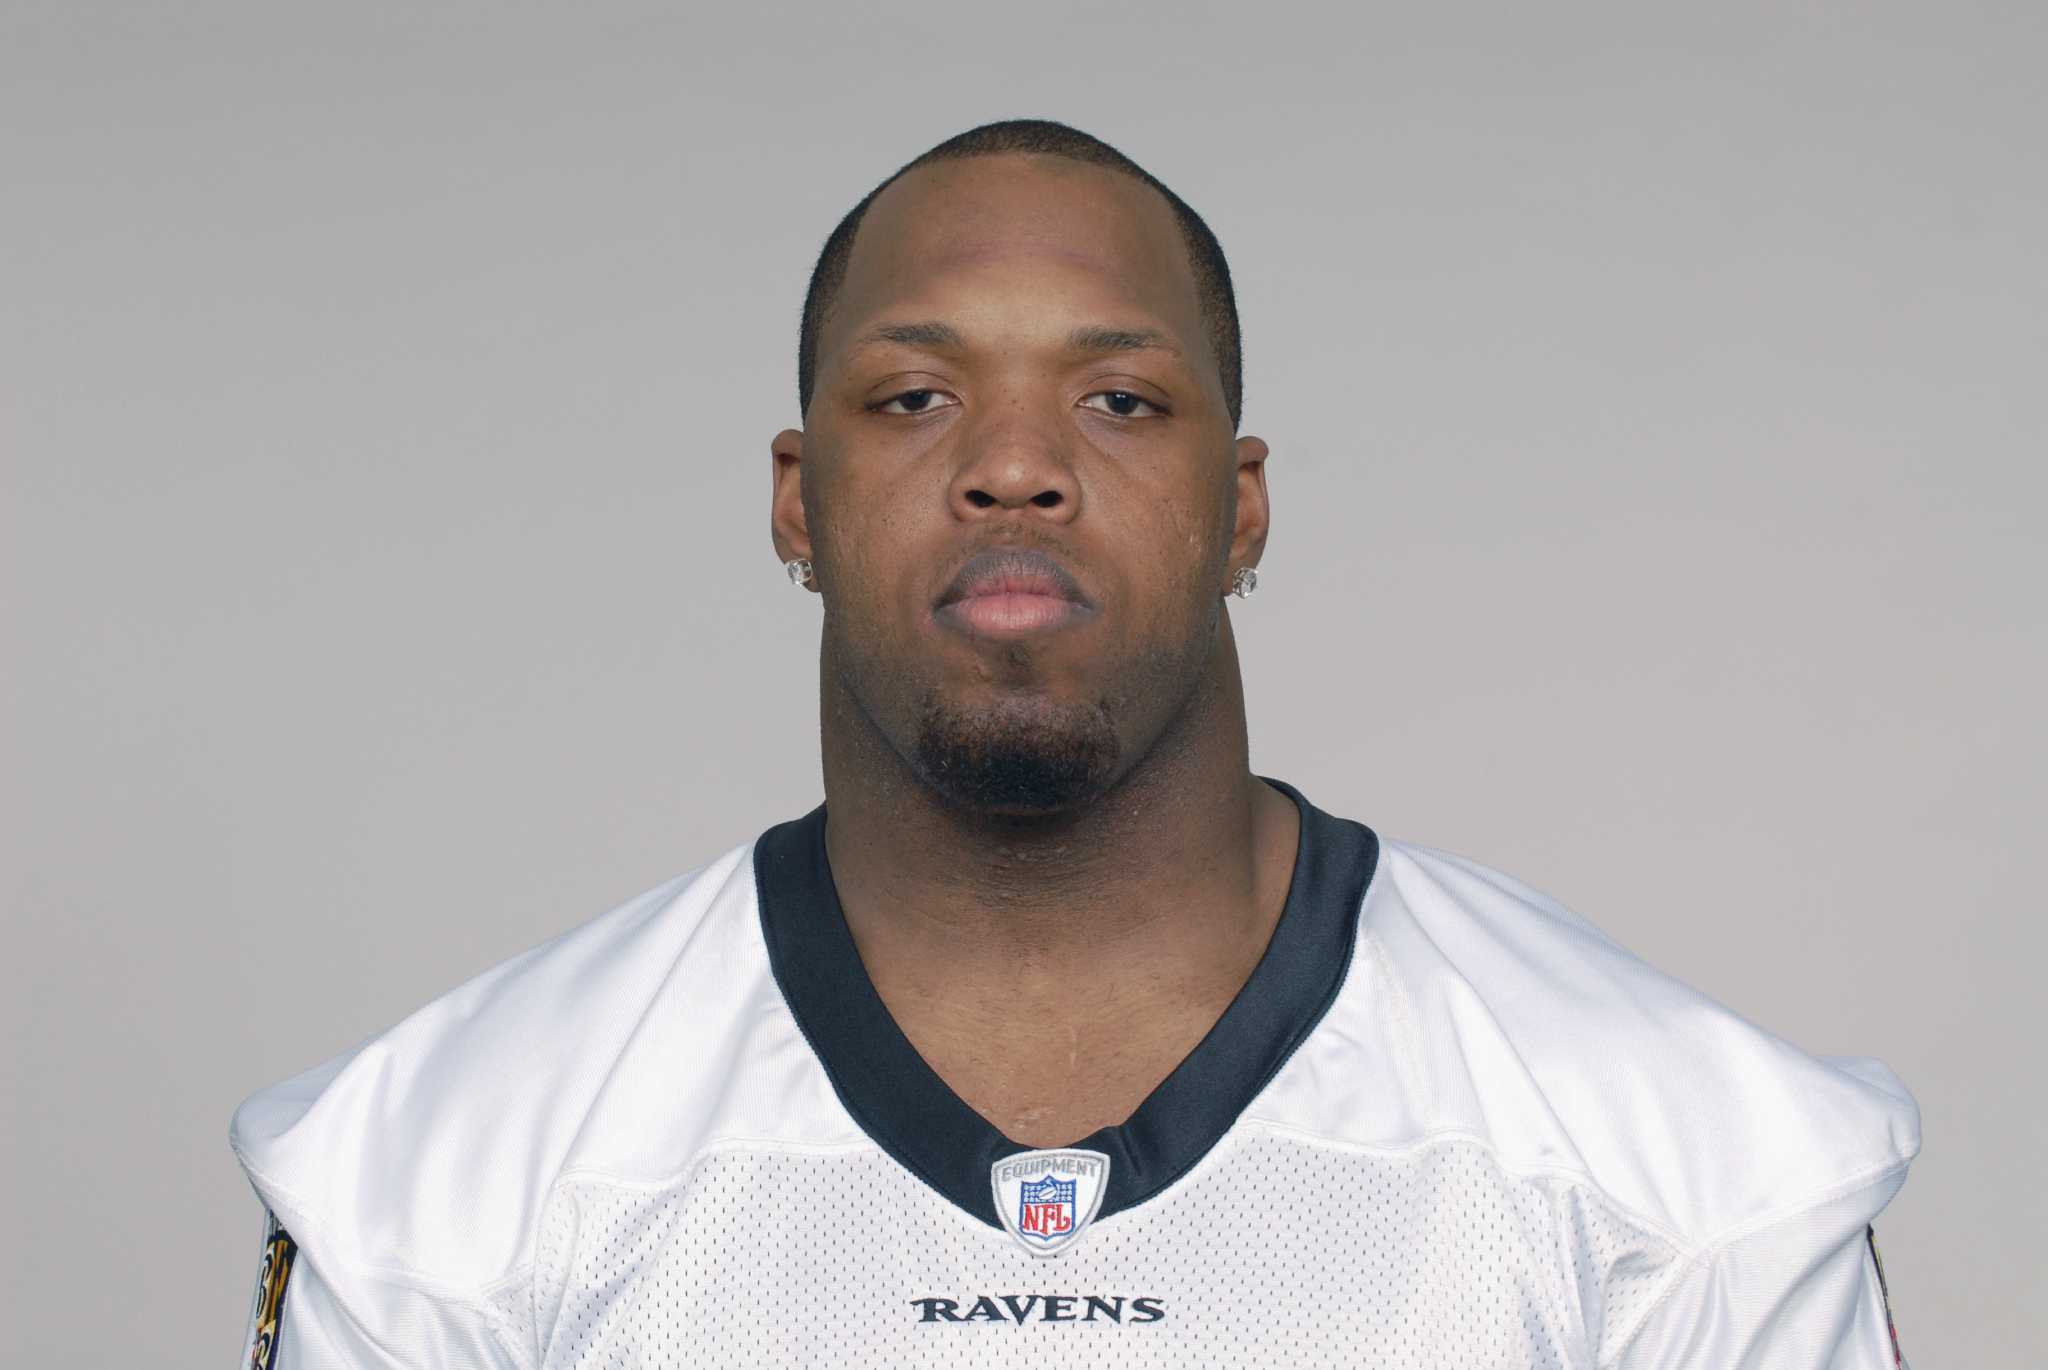 Terrell-Suggs-Baltimore-Ravens-Football-2011-NFL